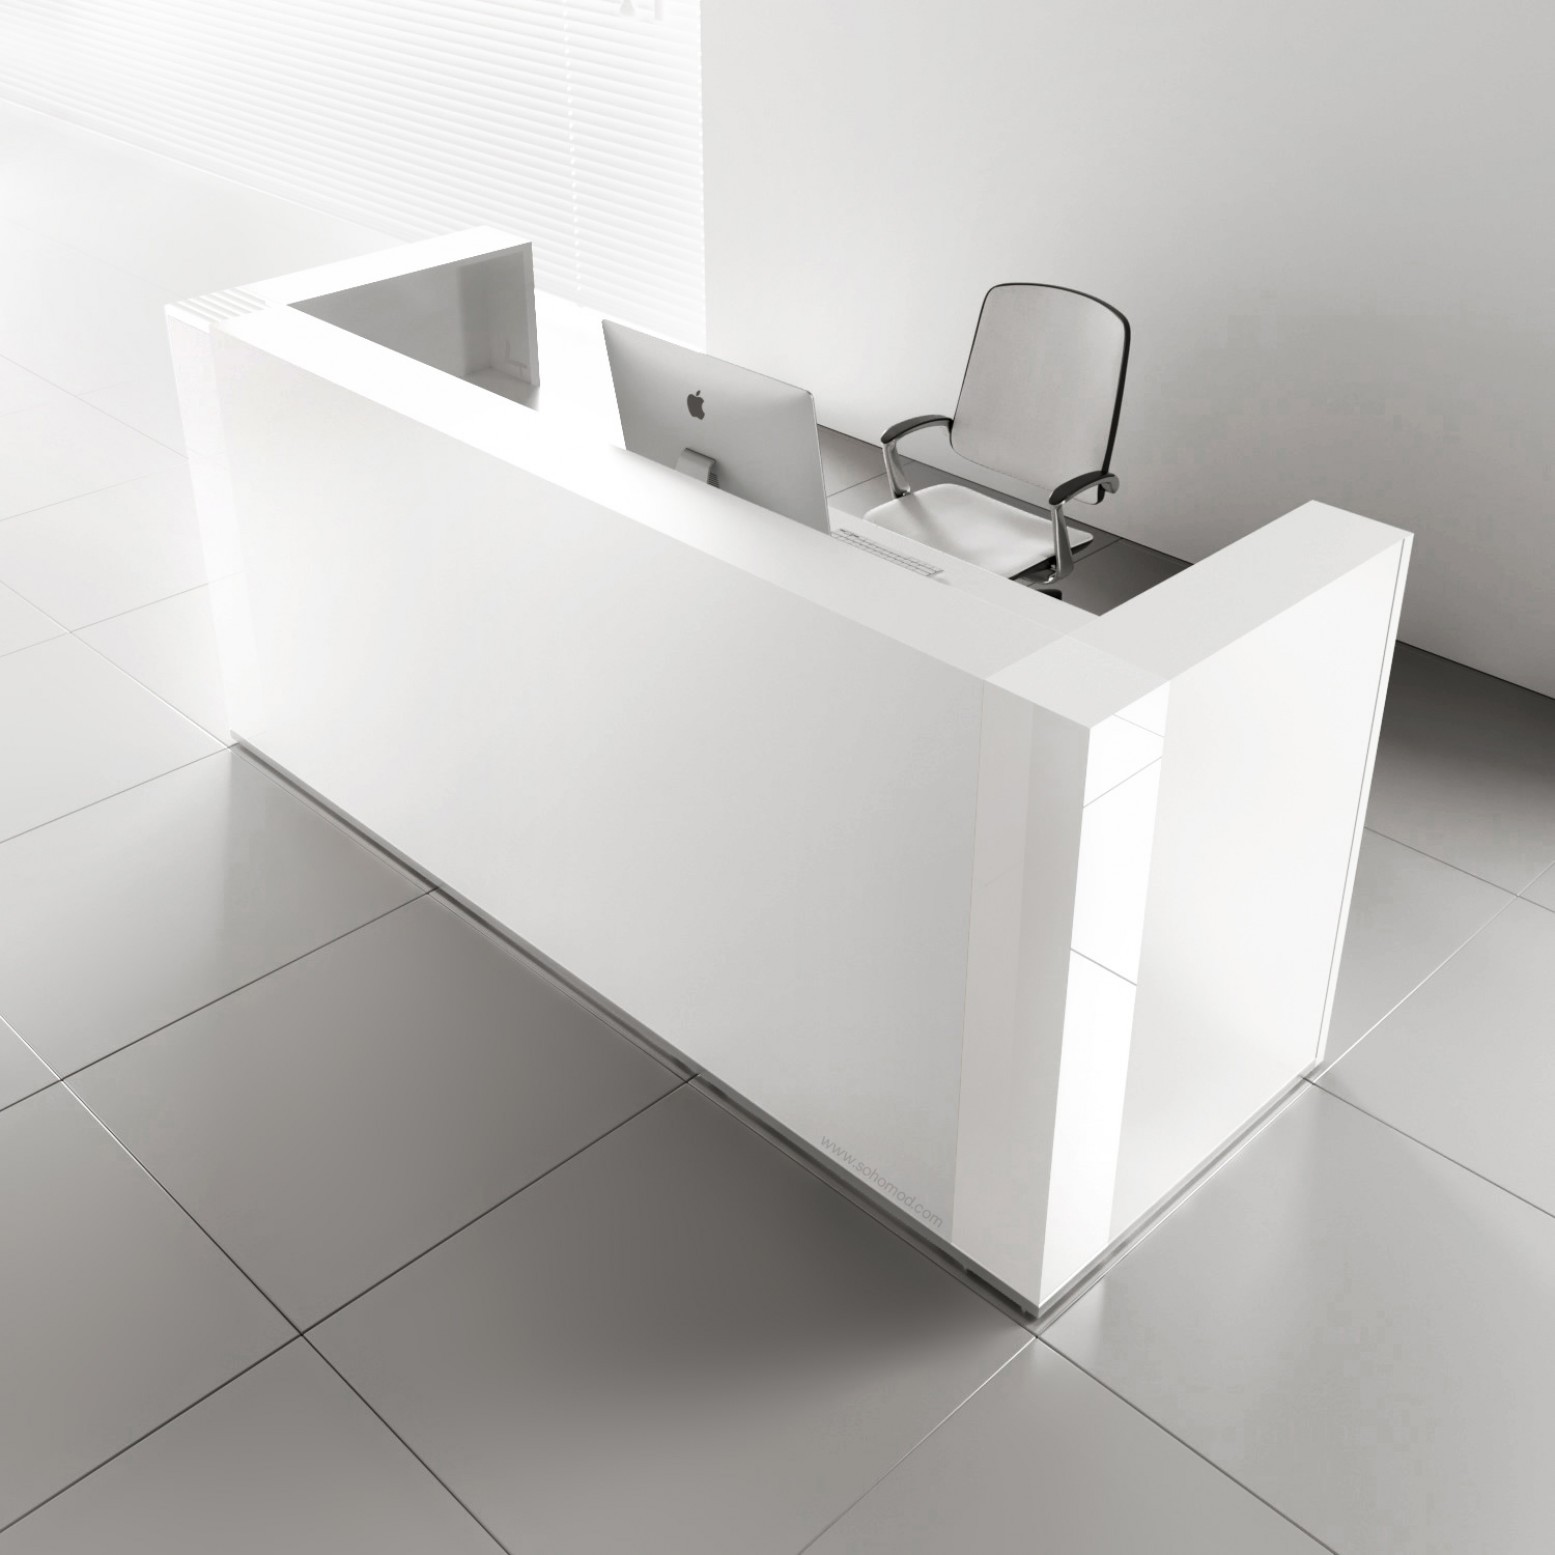 Tera tra122 reception desk white pastel buy online at